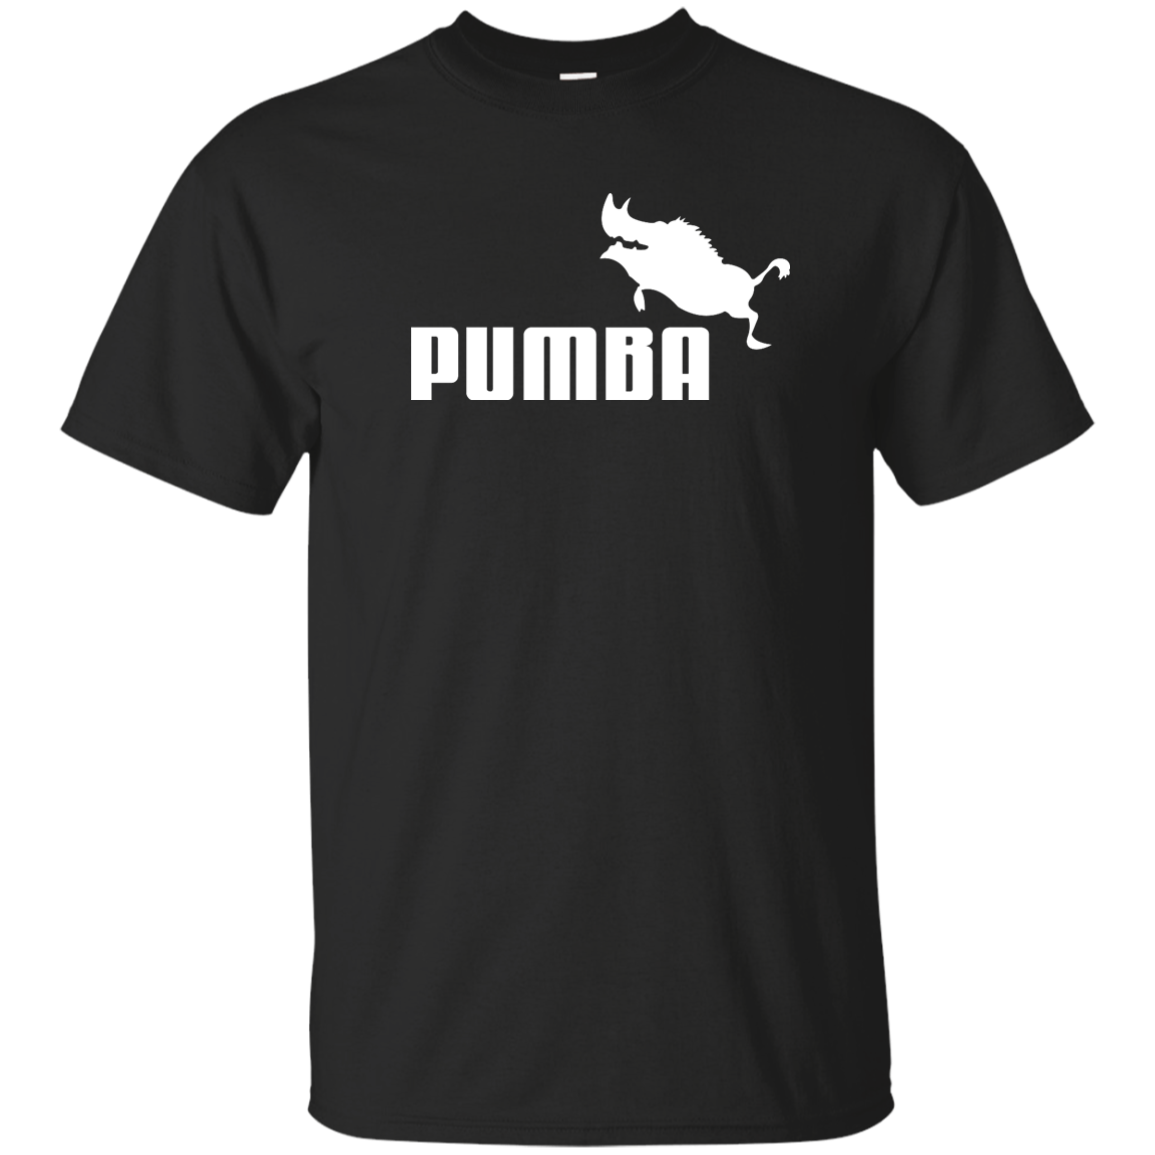 Puma Pumba Funny Shirt, Hoodie, Tank 